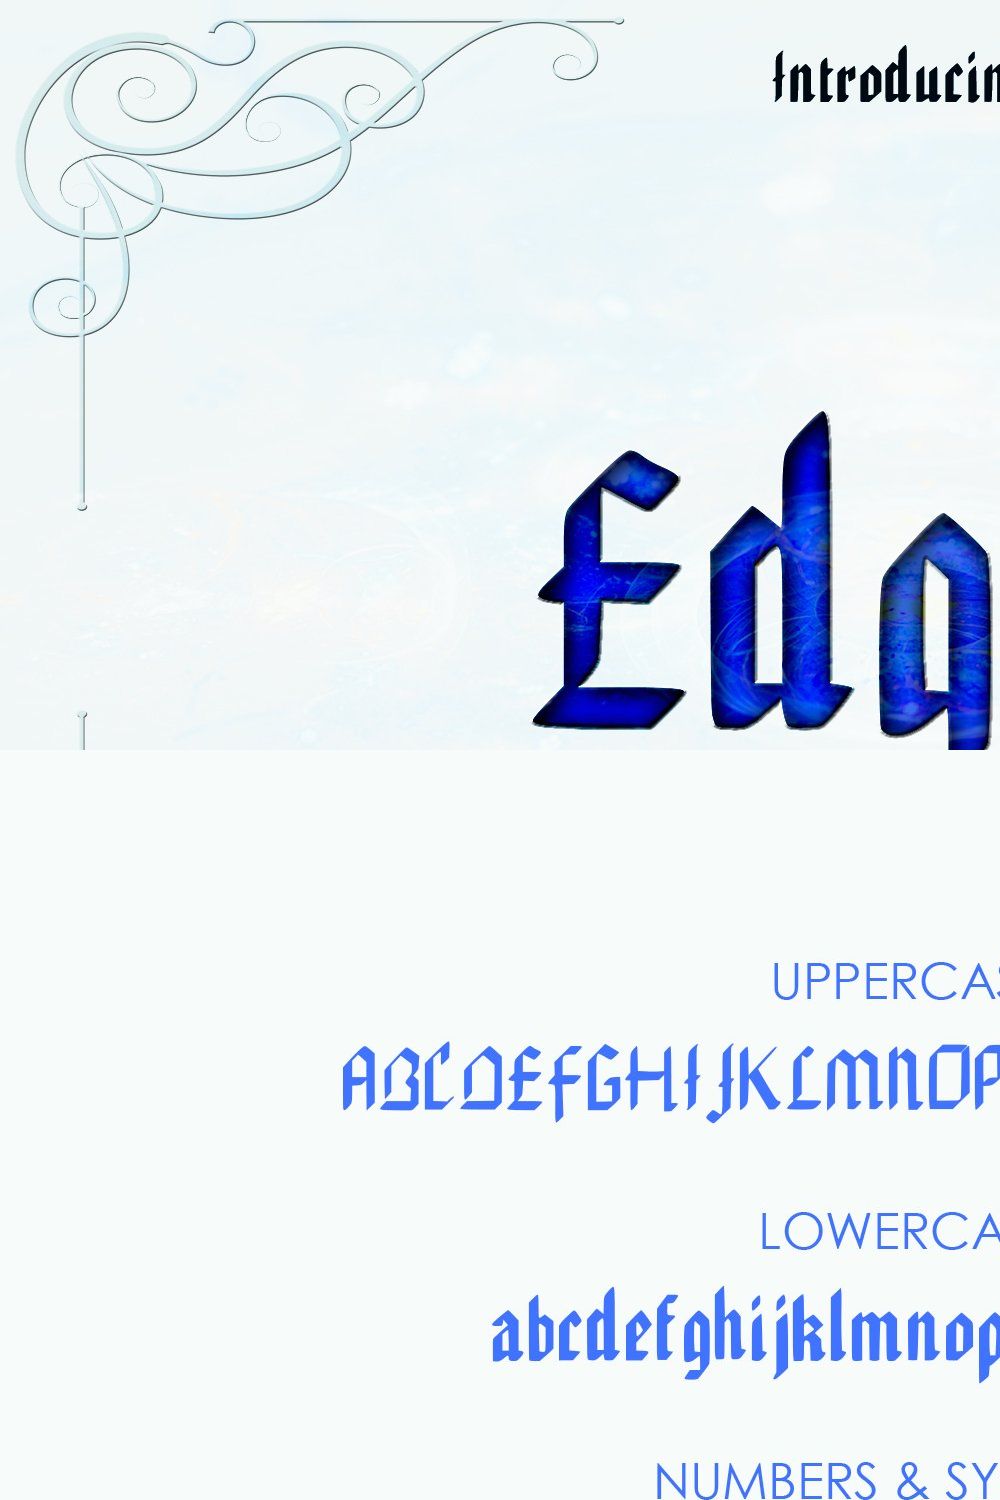 EDGAR, Handmade Gothic Typeface pinterest preview image.